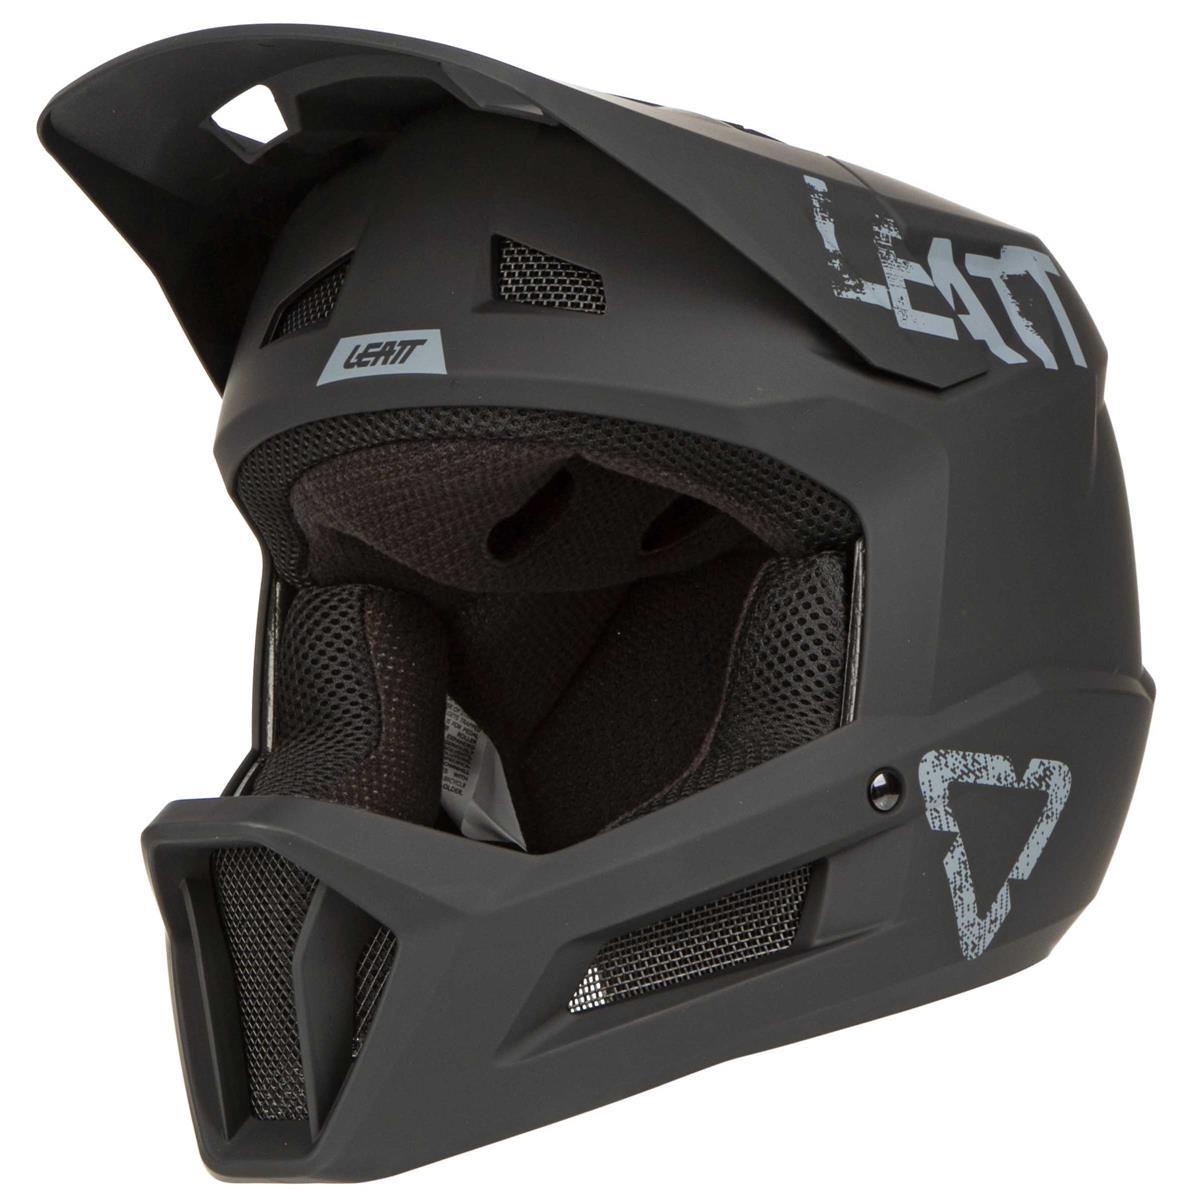 Leatt Downhill MTB Helmet 1.0 Gravity Black